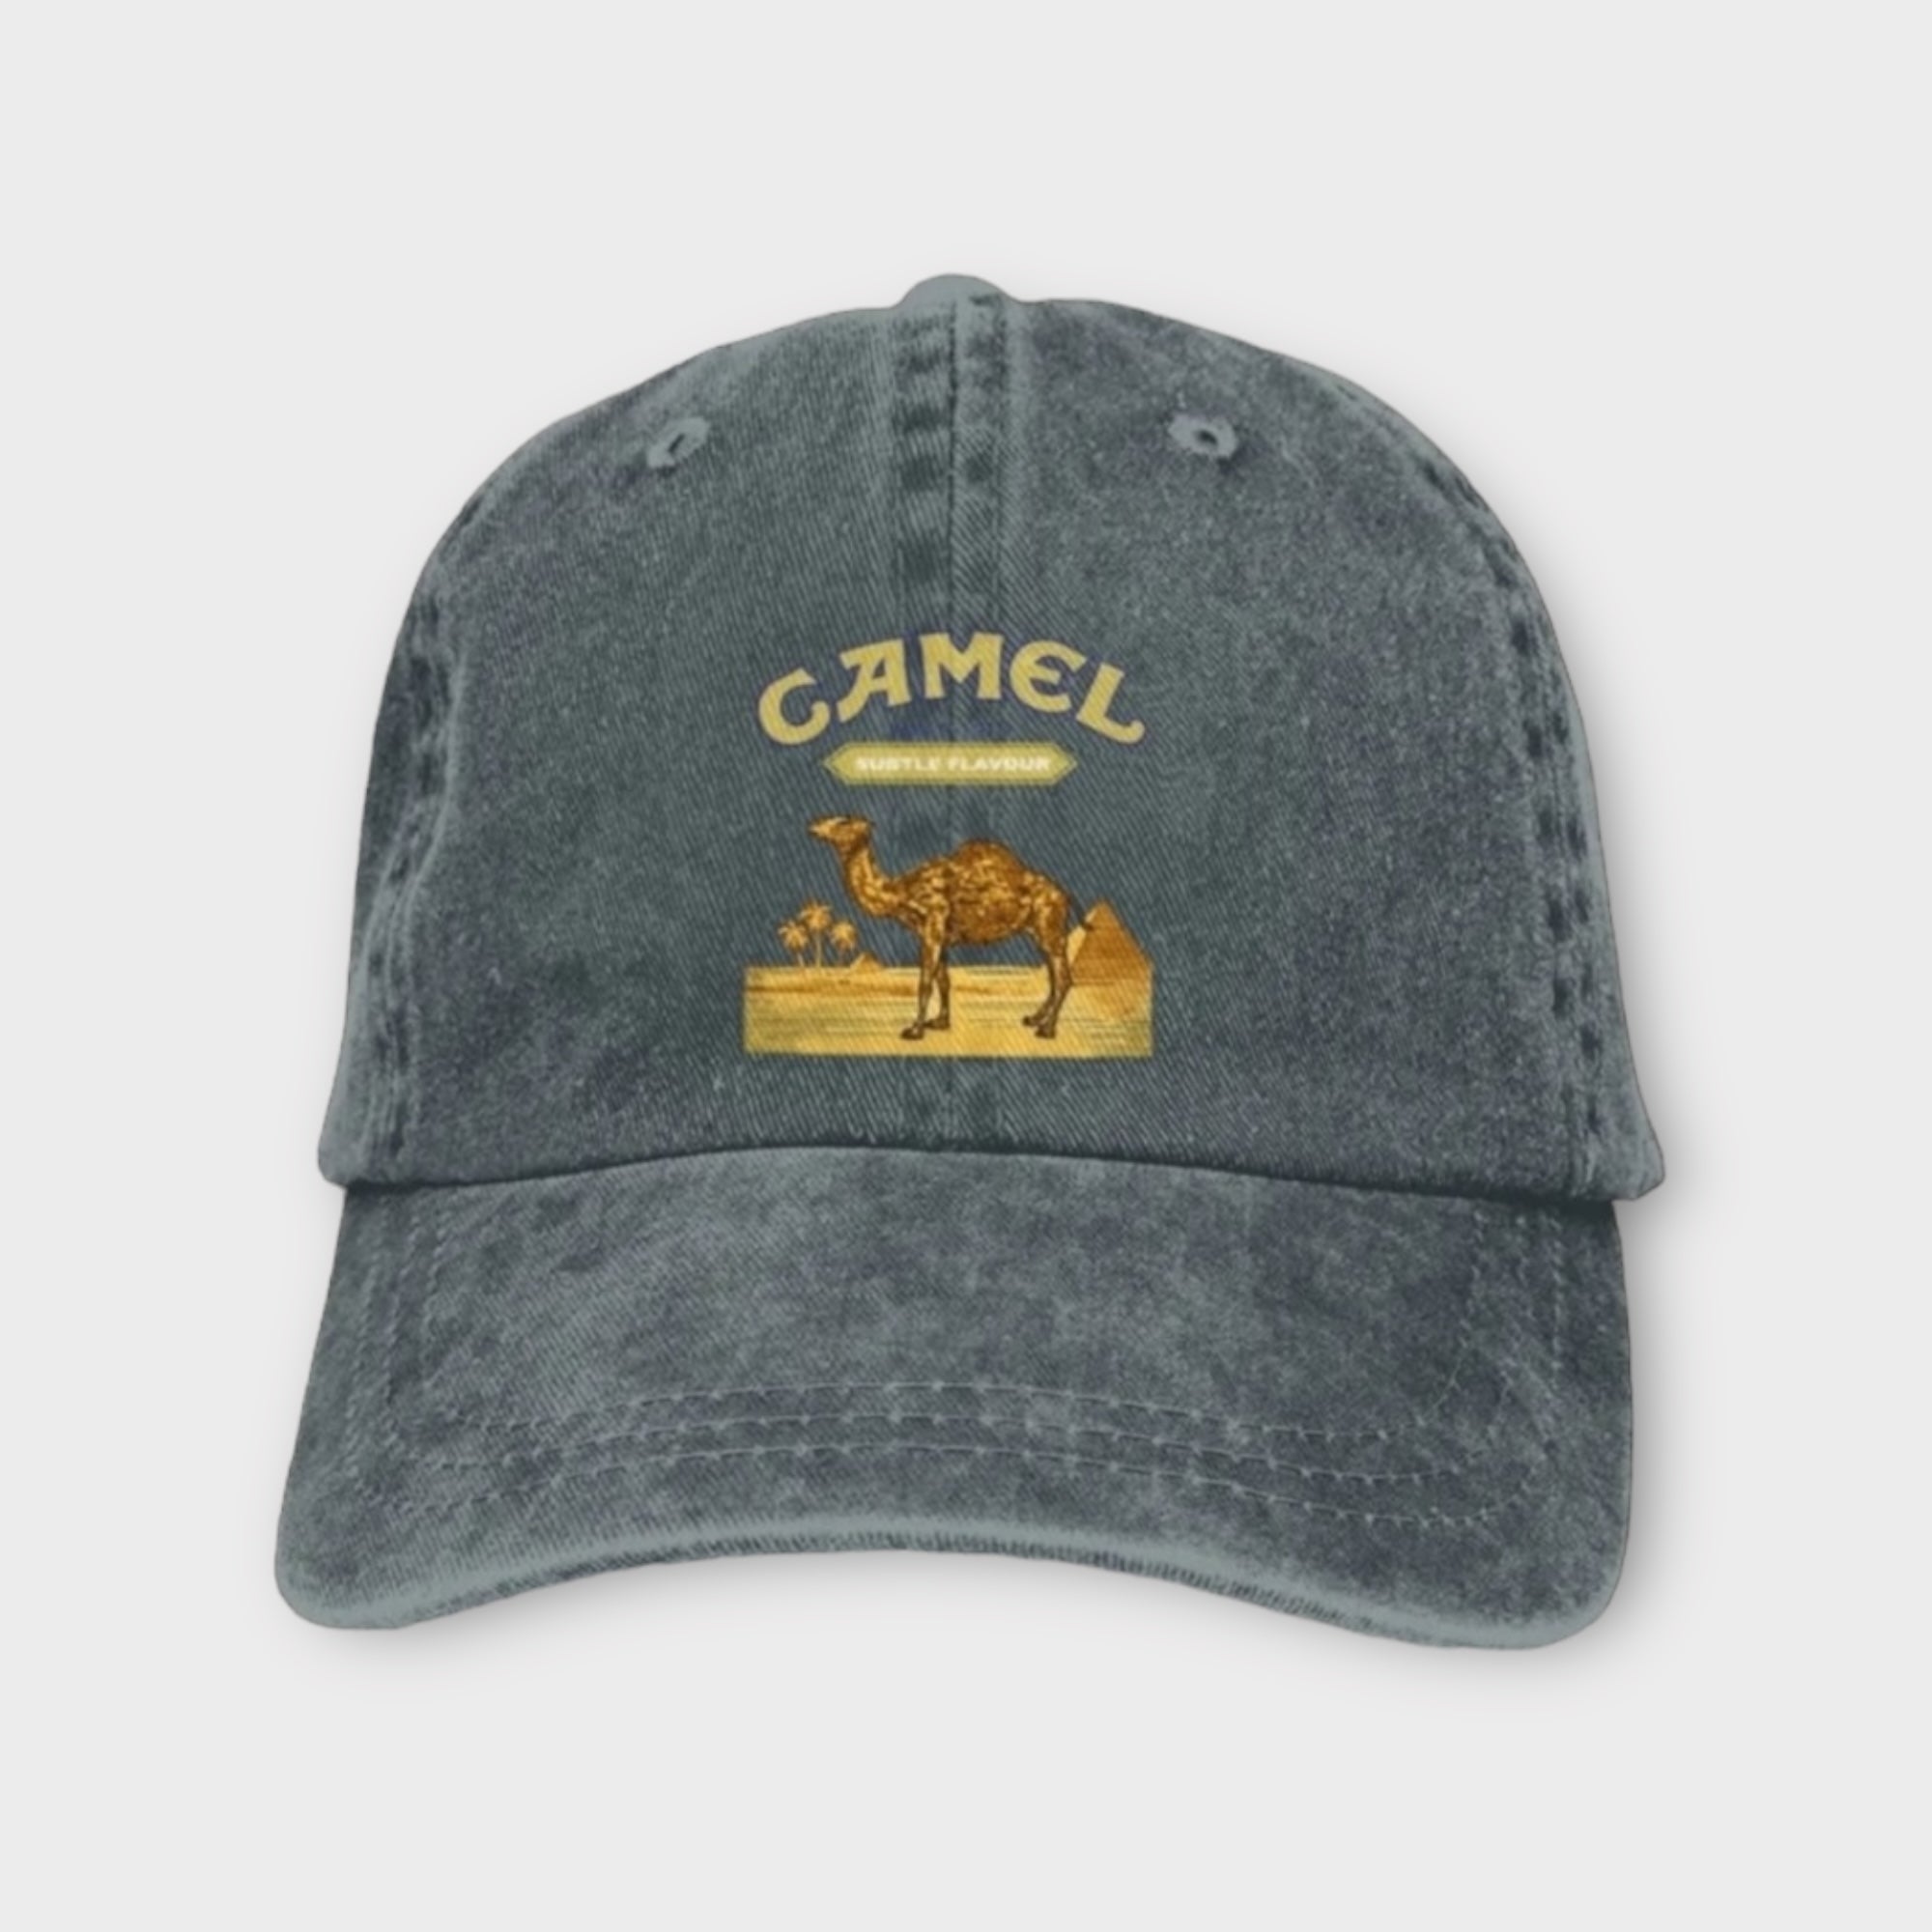 'FEJD' Camel baseball cap for men and women